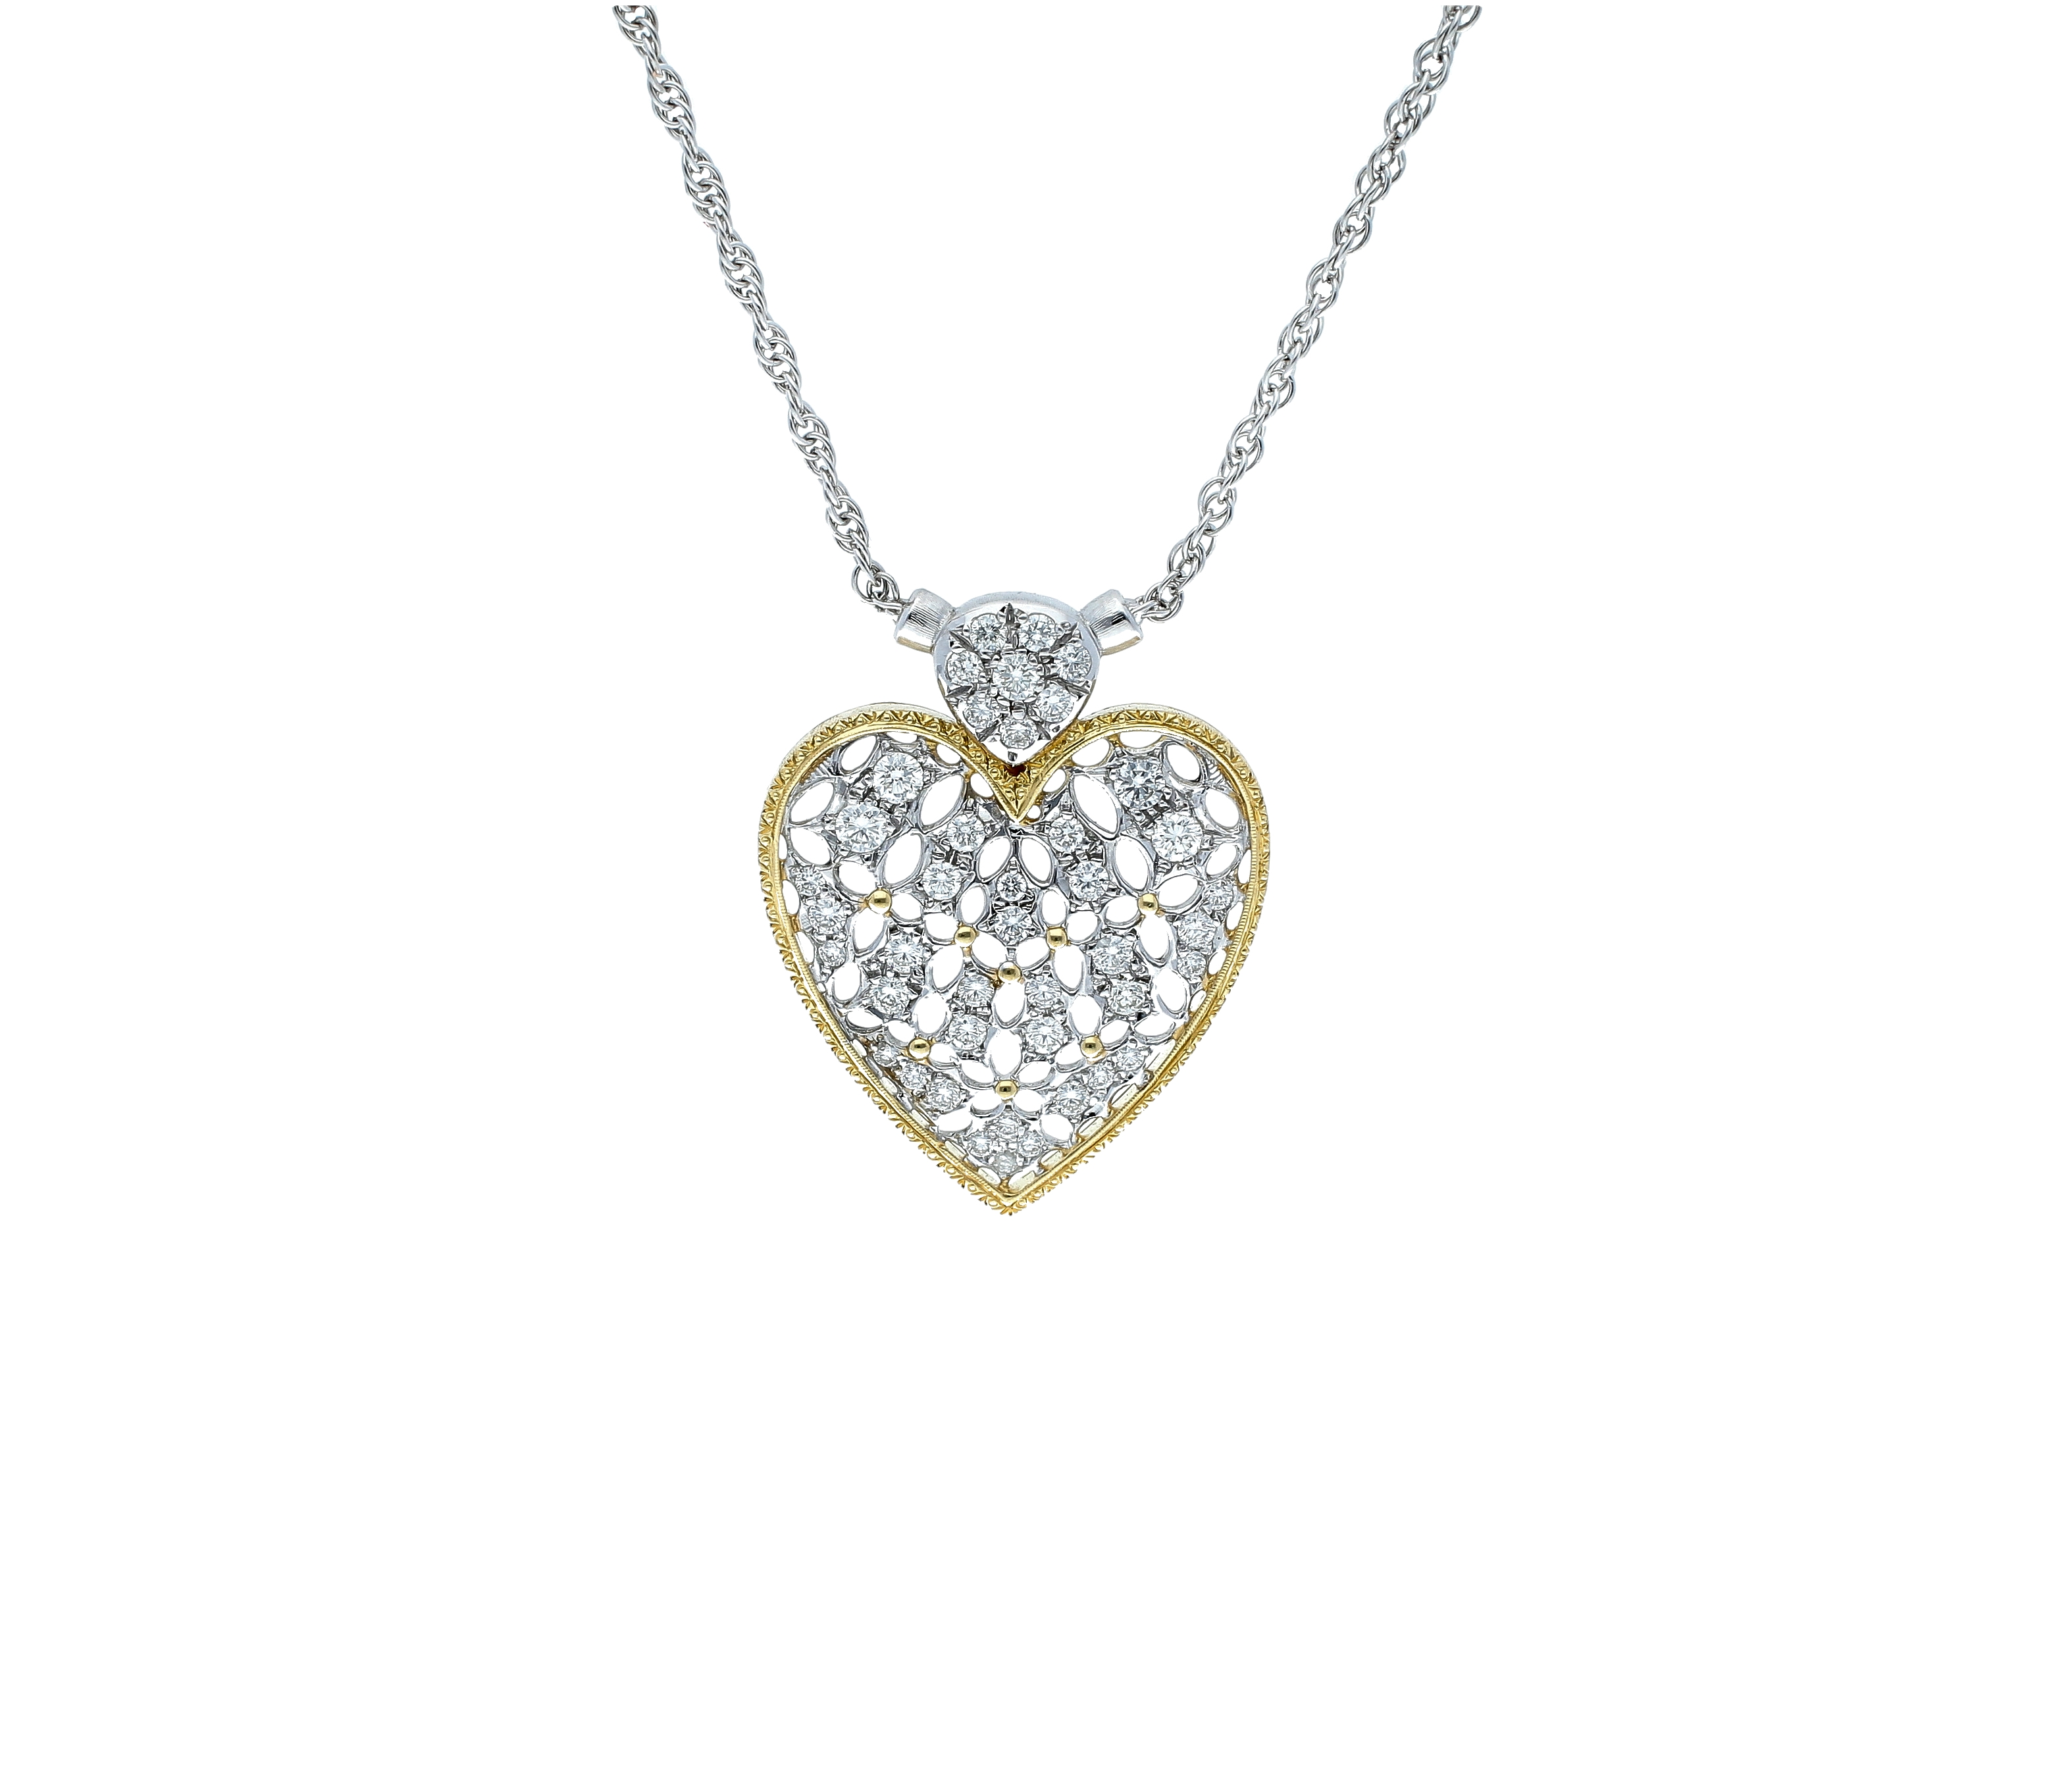 Florentine diamond heart shaped pendant necklace 18kt gold